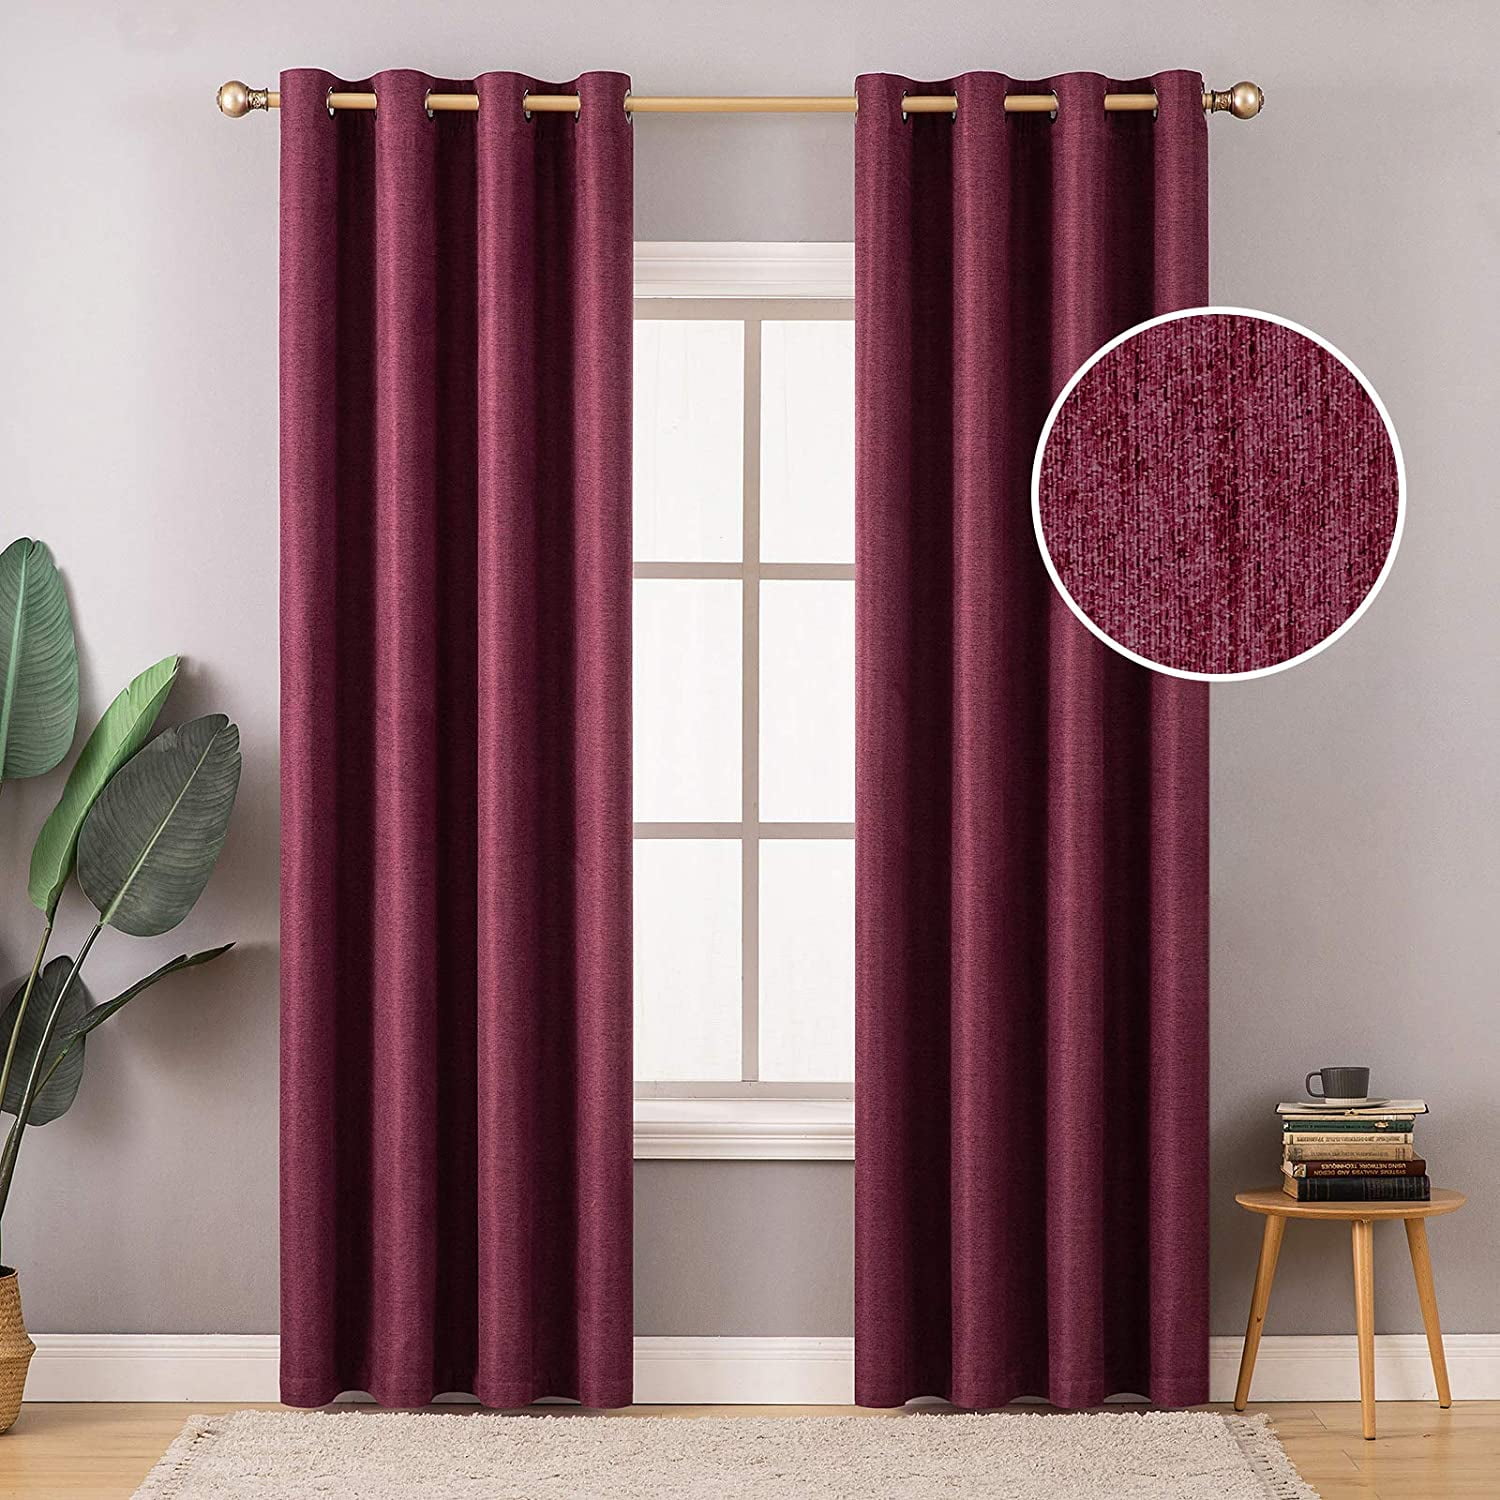 Maroon 72 inch High Cotton Velvet Curtain Panel w/Grommet Eyelet Window Drapery 